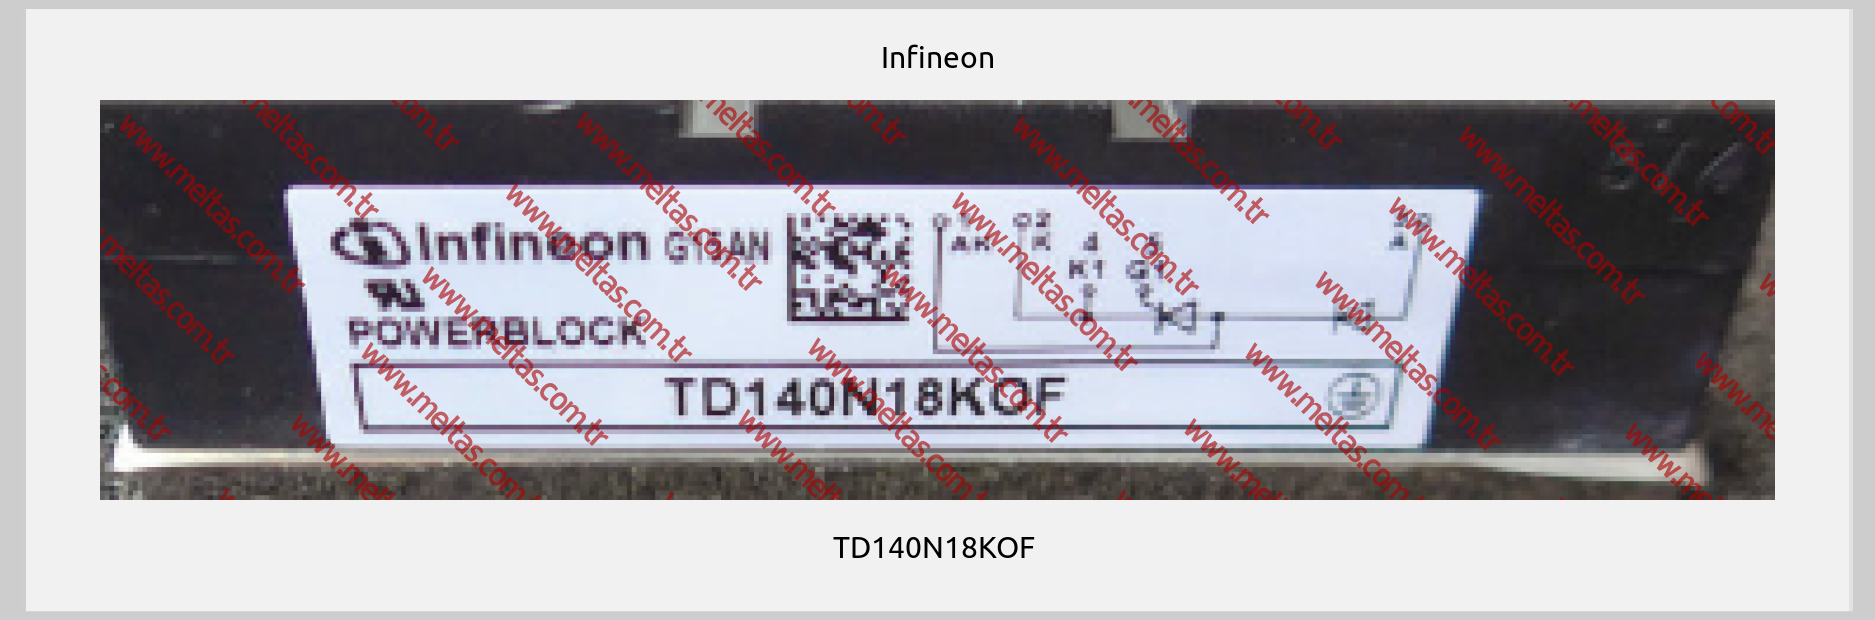 Infineon - TD140N18KOF 